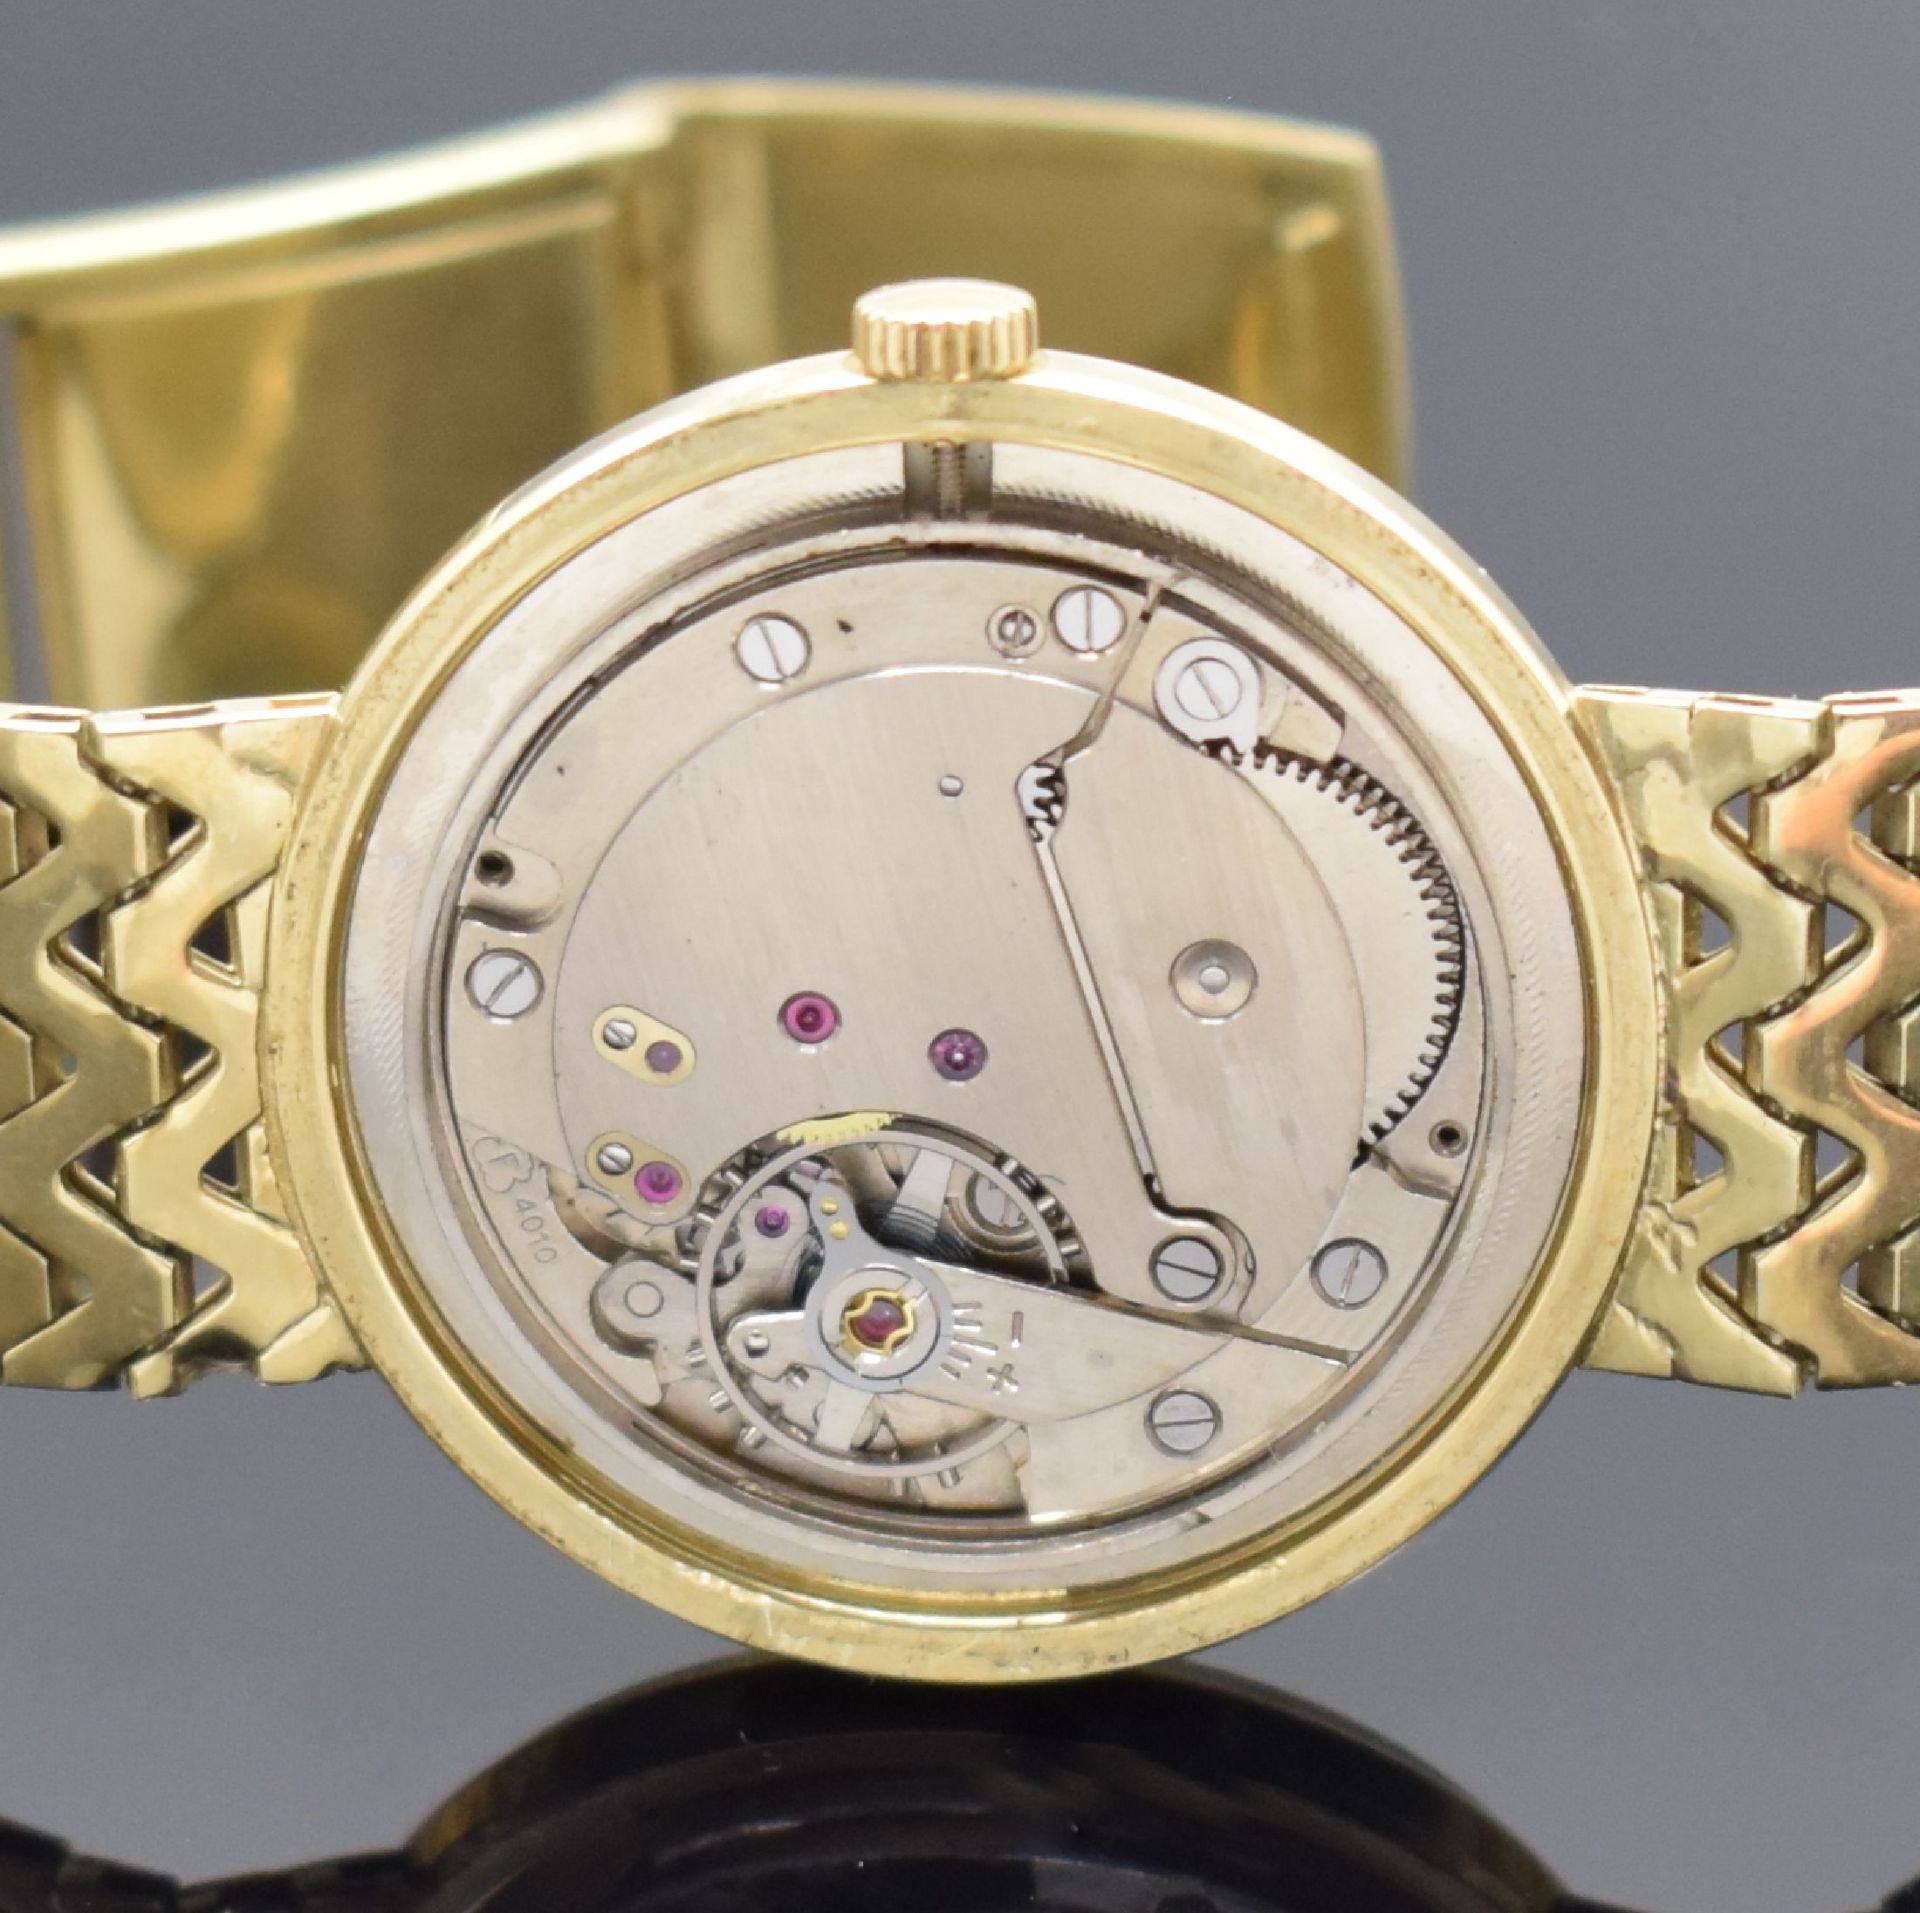 ROXY Armbanduhr in GG 585/000, Handaufzug, Schweiz um - Image 6 of 6